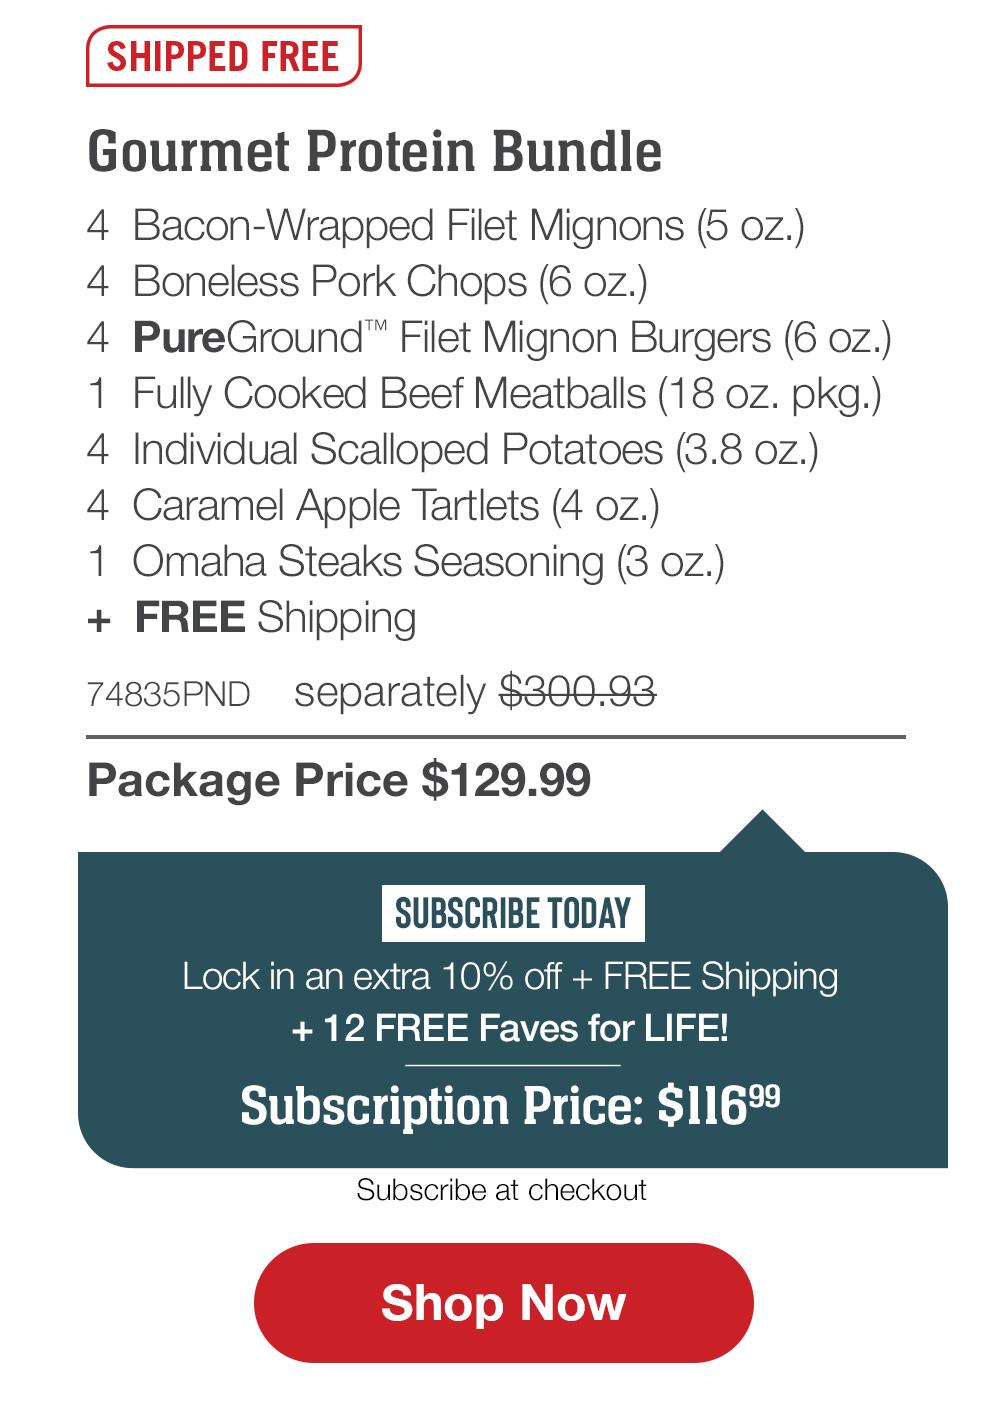 SHIPPED FREE | Gourmet Grilling Essentials - 4  Bacon-Wrapped Filet Mignons (5 oz.) - 4  Boneless Pork Chops (6 oz.) - 4  PureGround™ Filet Mignon Burgers (6 oz.) - 2  pkgs. Ultra-Premium Ground Beef (1 lb. pkgs.) - 4  Individual Scalloped Potatoes (3.8 oz.) - 4  Caramel Apple Tartlets (4 oz.) - 1  jar Omaha Steaks Seasoning (3.1 oz.) - 73672PND separately $290.93 | Package Price $129.99 || Shop Now